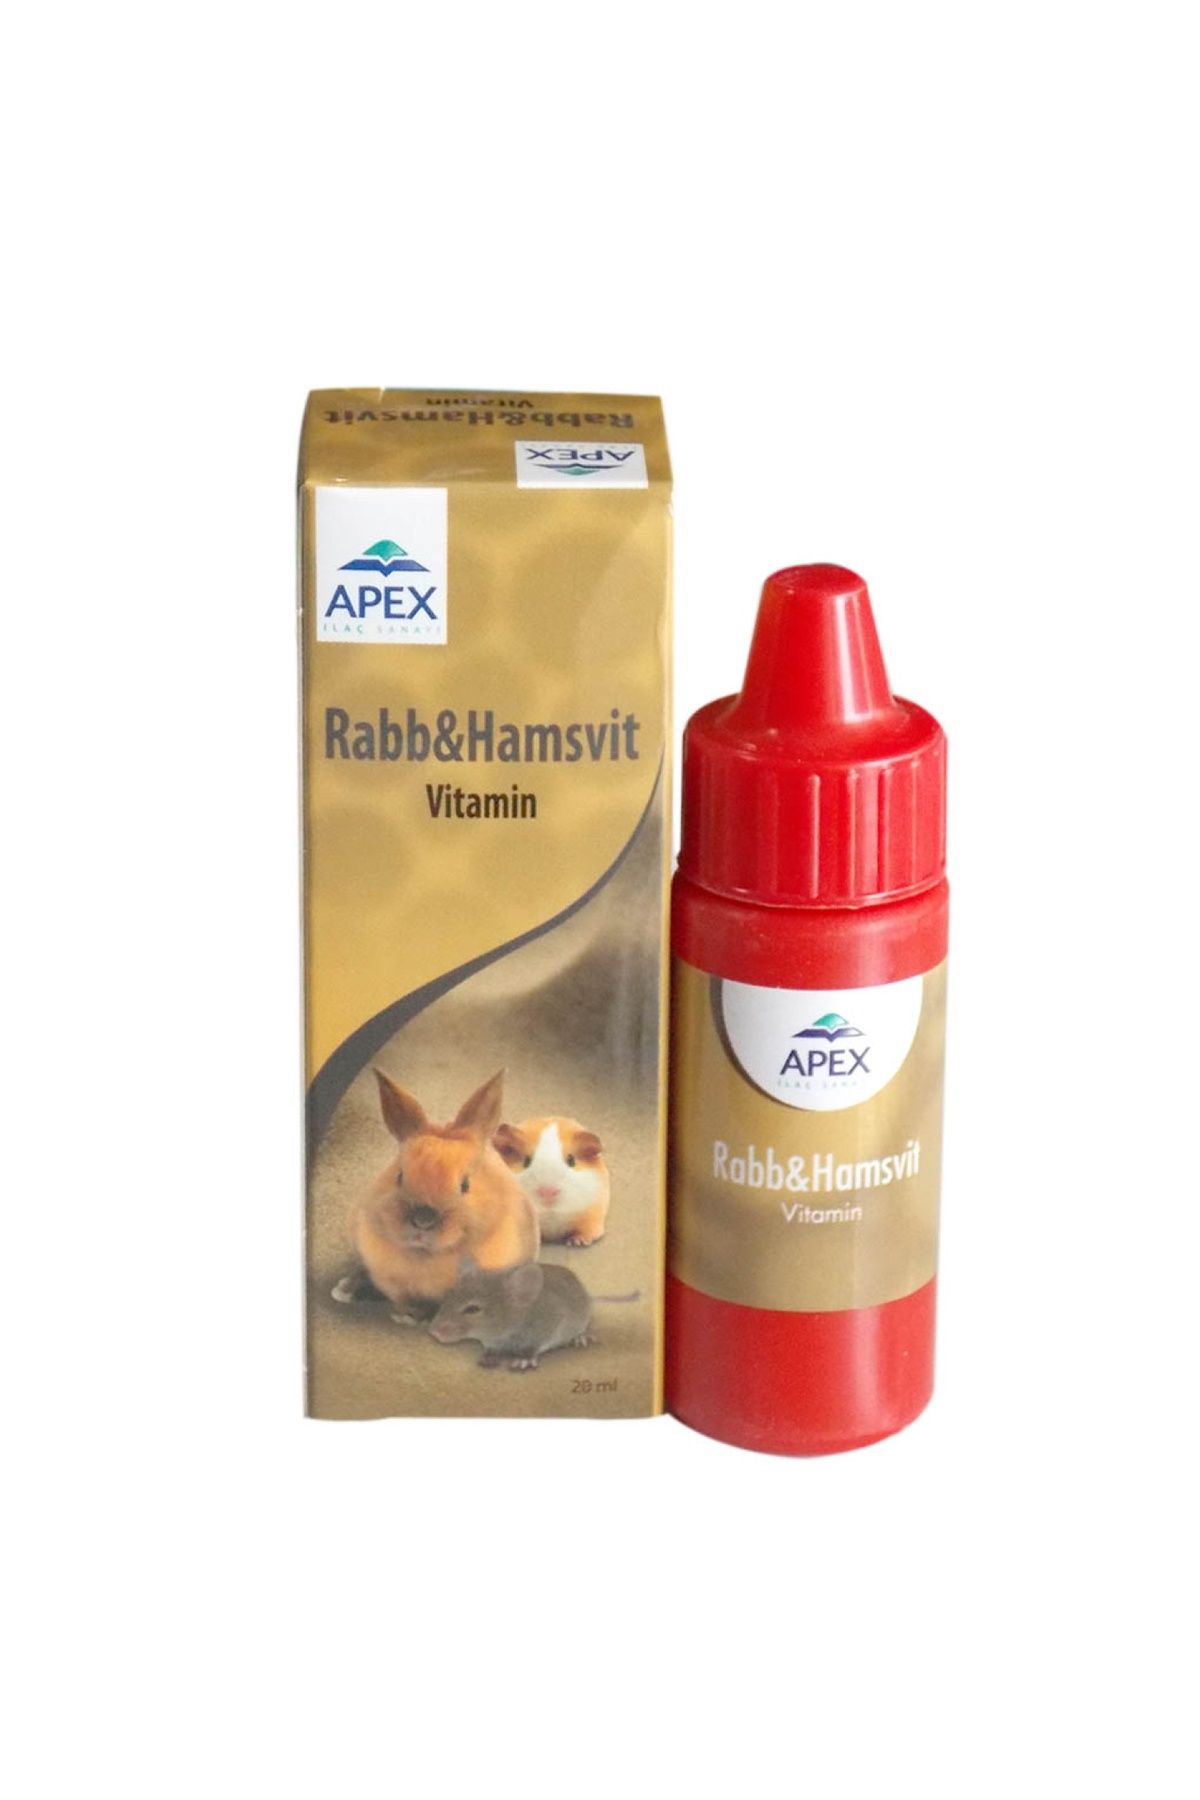 ENSAR GİYİM Hamster Vitamini Rabb-hamsvit - Apex